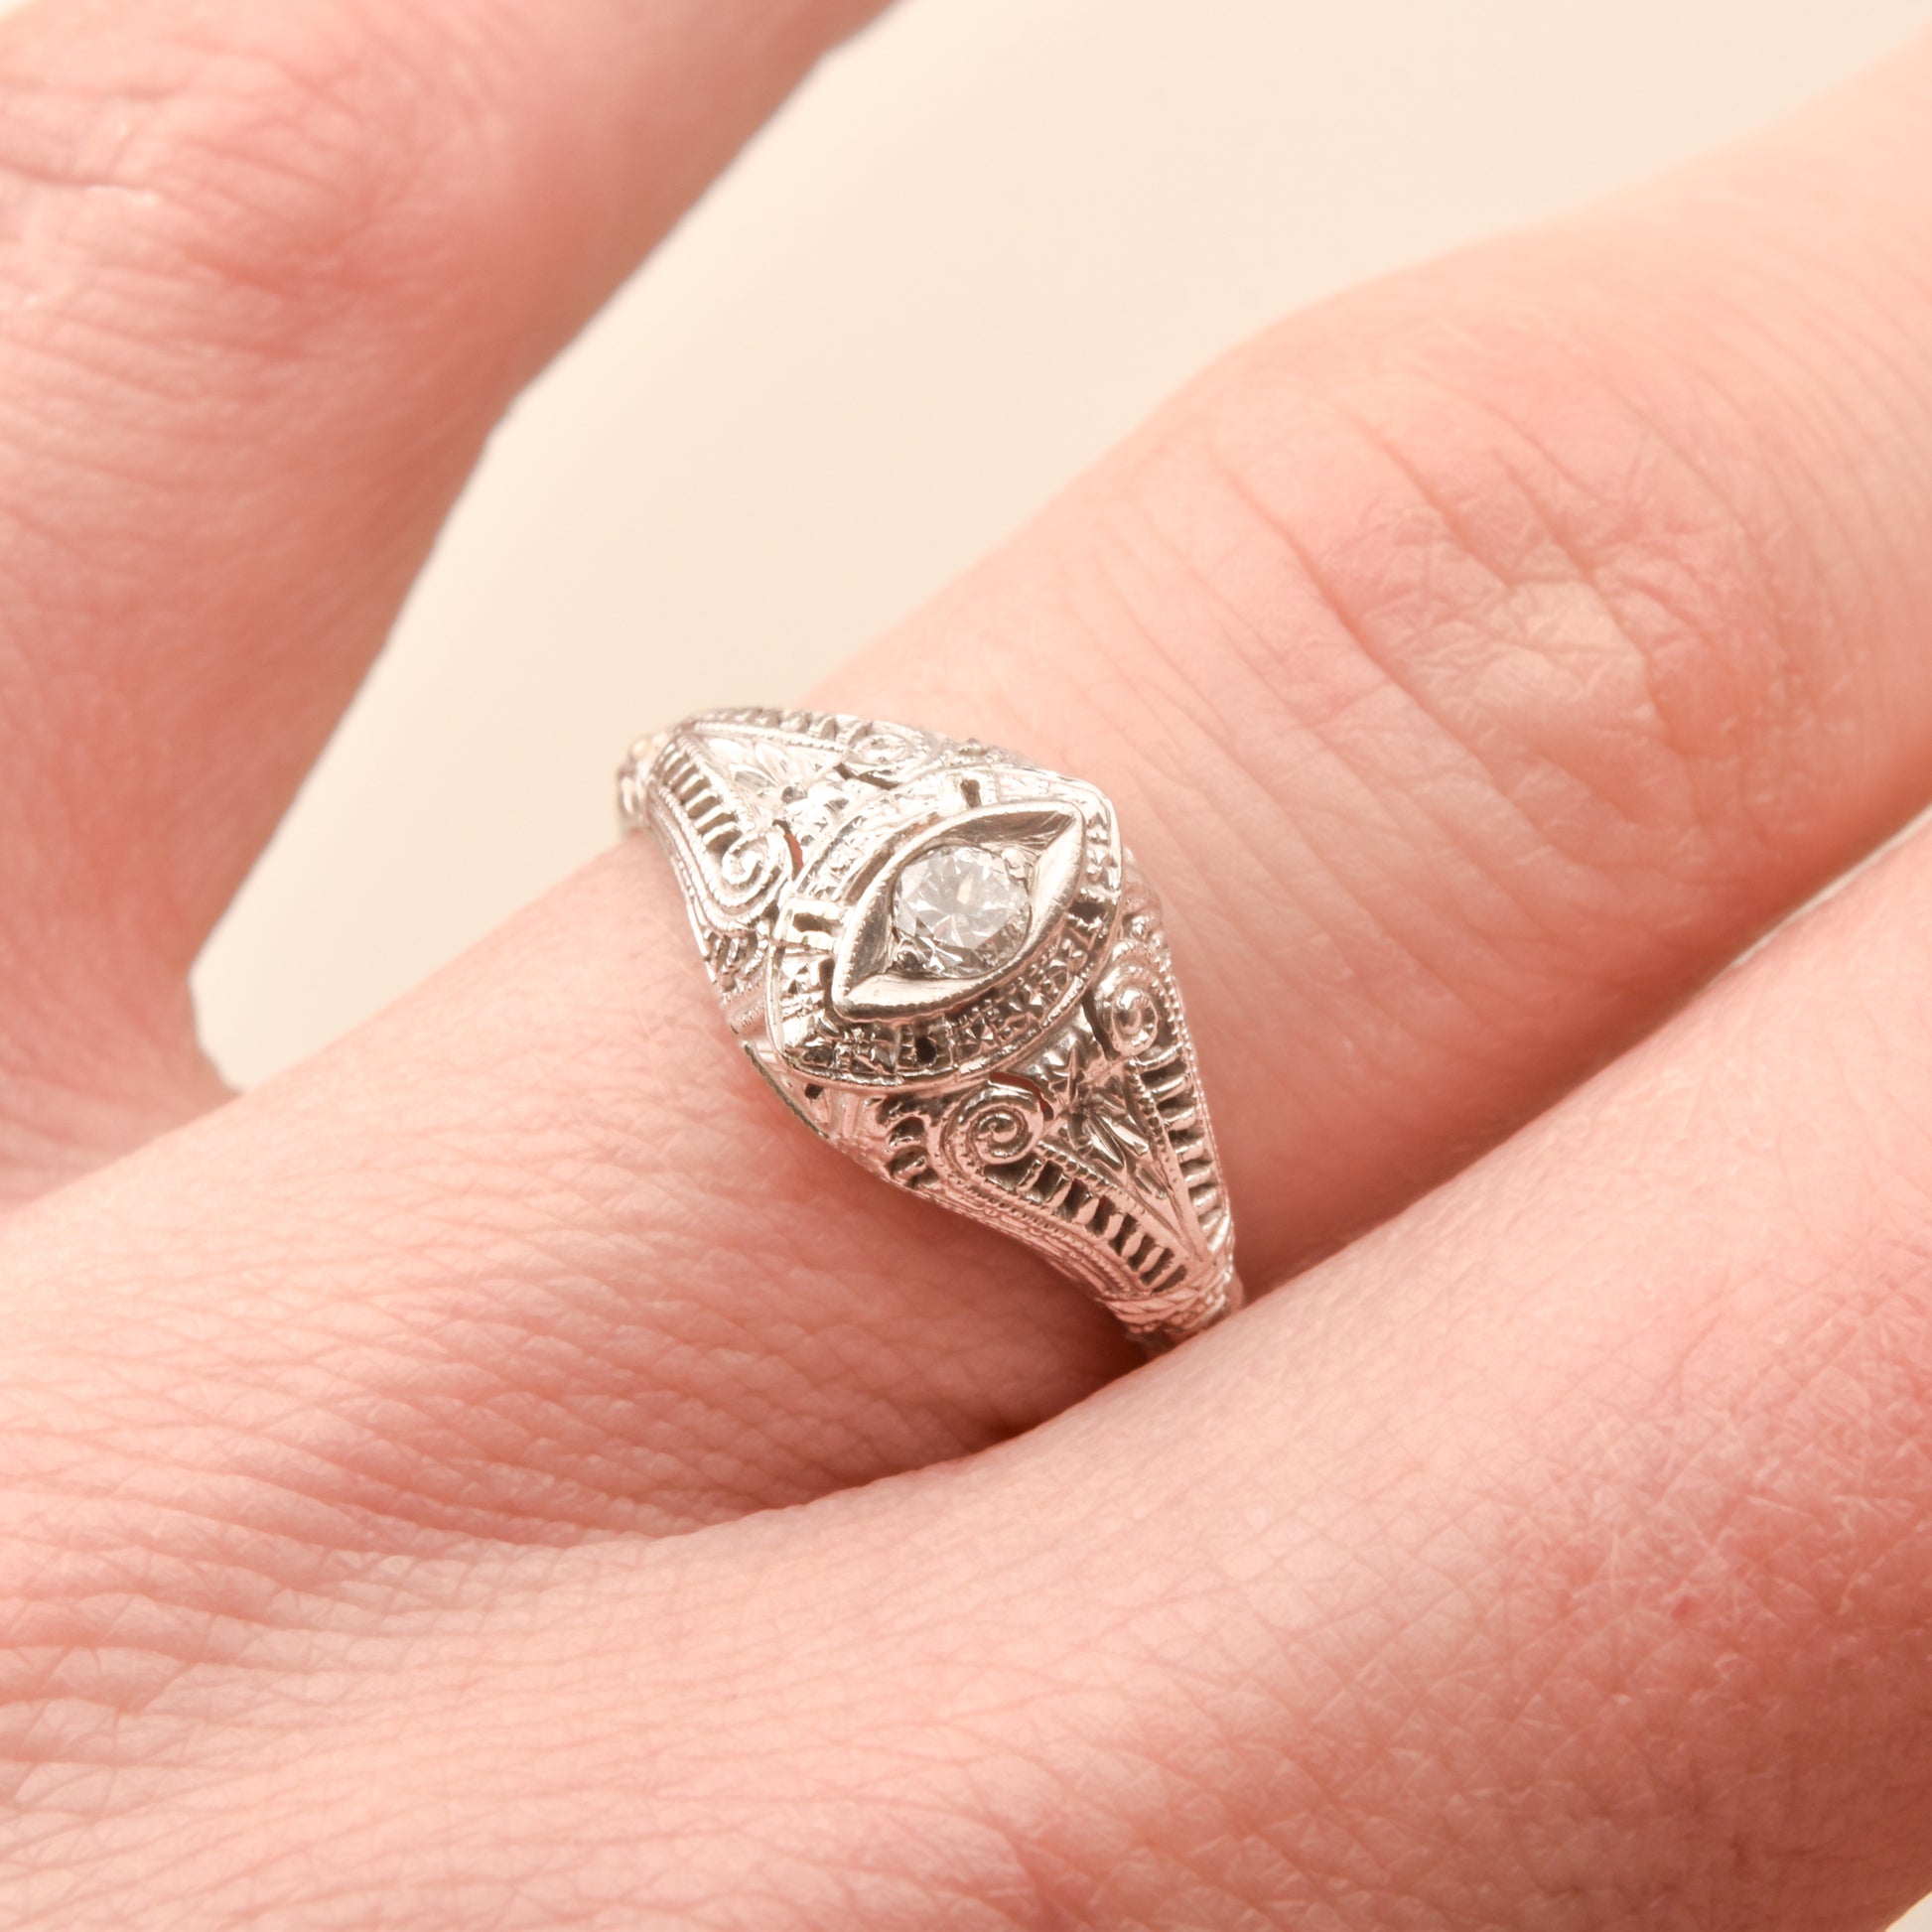 Art Deco 18K filigree diamond solitaire ring with 0.08 CT brilliant diamond, size 6.25 US, on a person's finger.